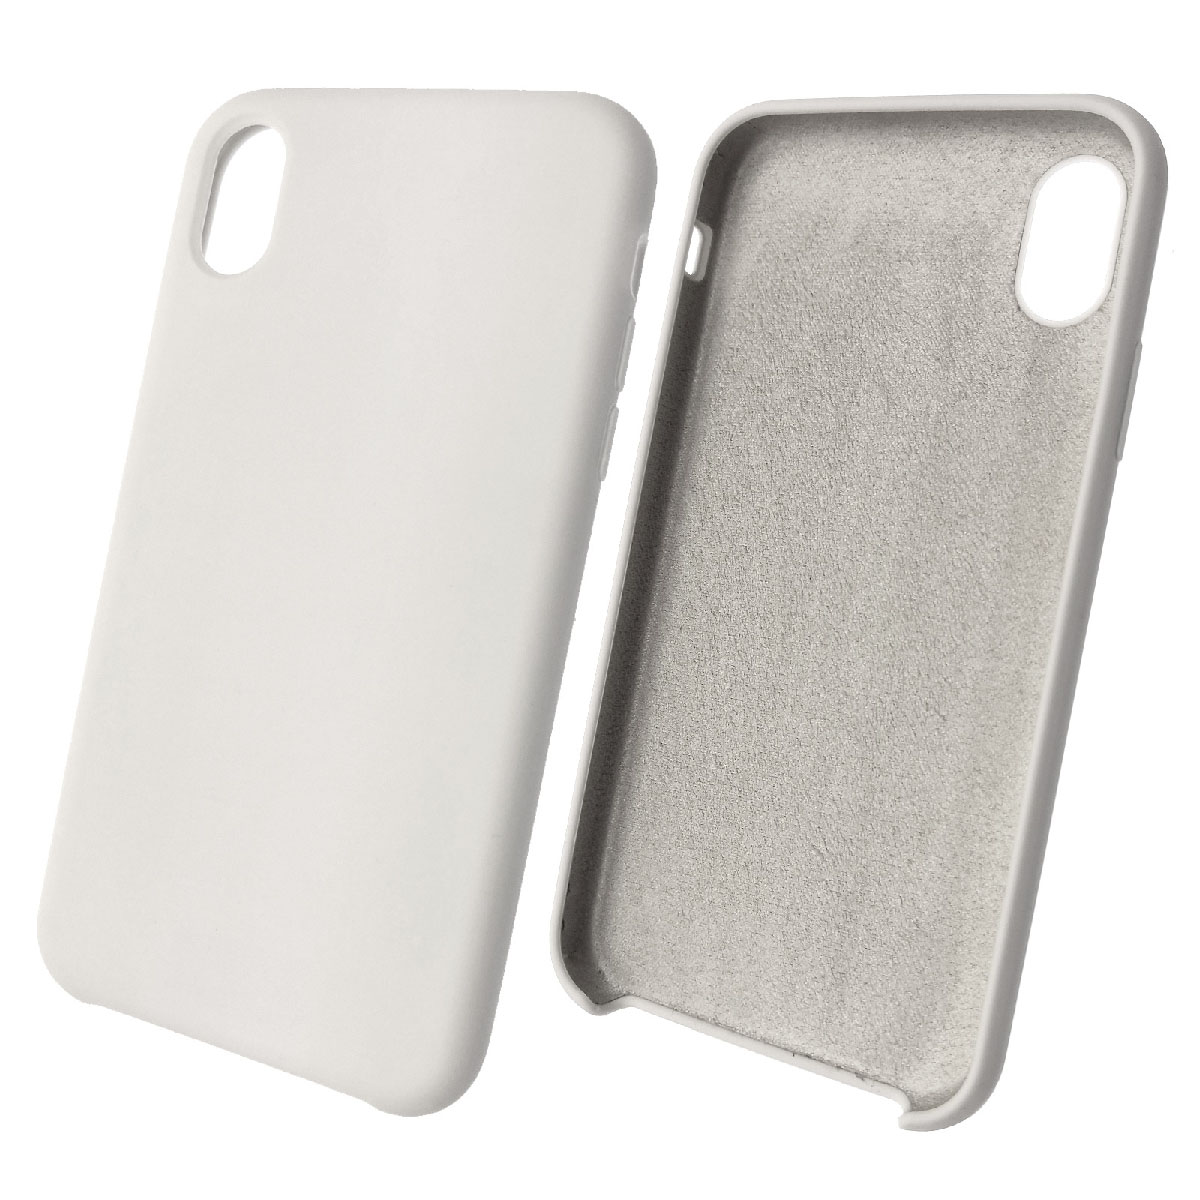 Чехол накладка Silicon Case для APPLE iPhone XR, силикон, бархат, цвет белый.